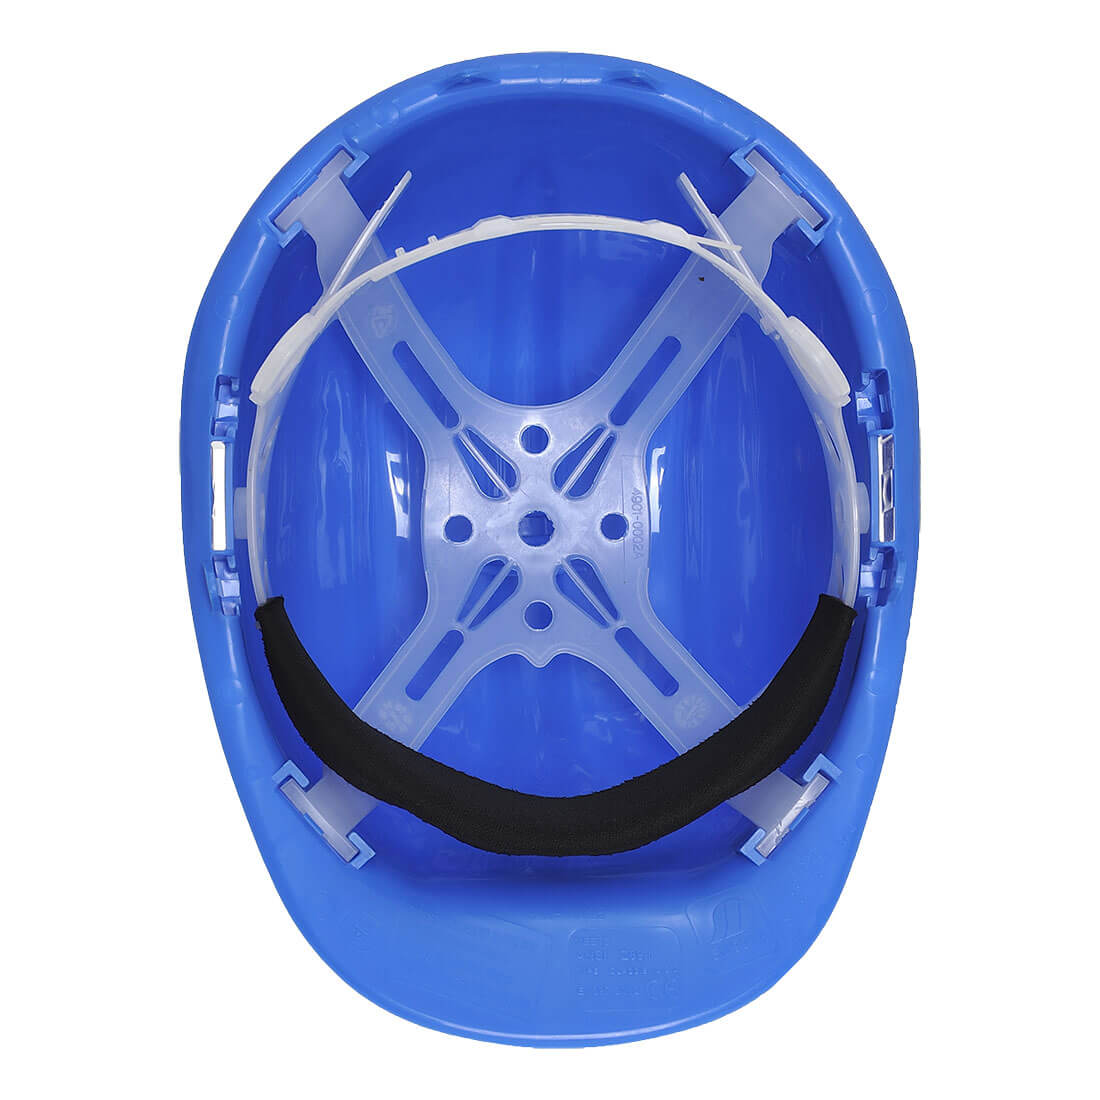 Portwest PW50 Expertbase  Safety Helmet - Royal Blue